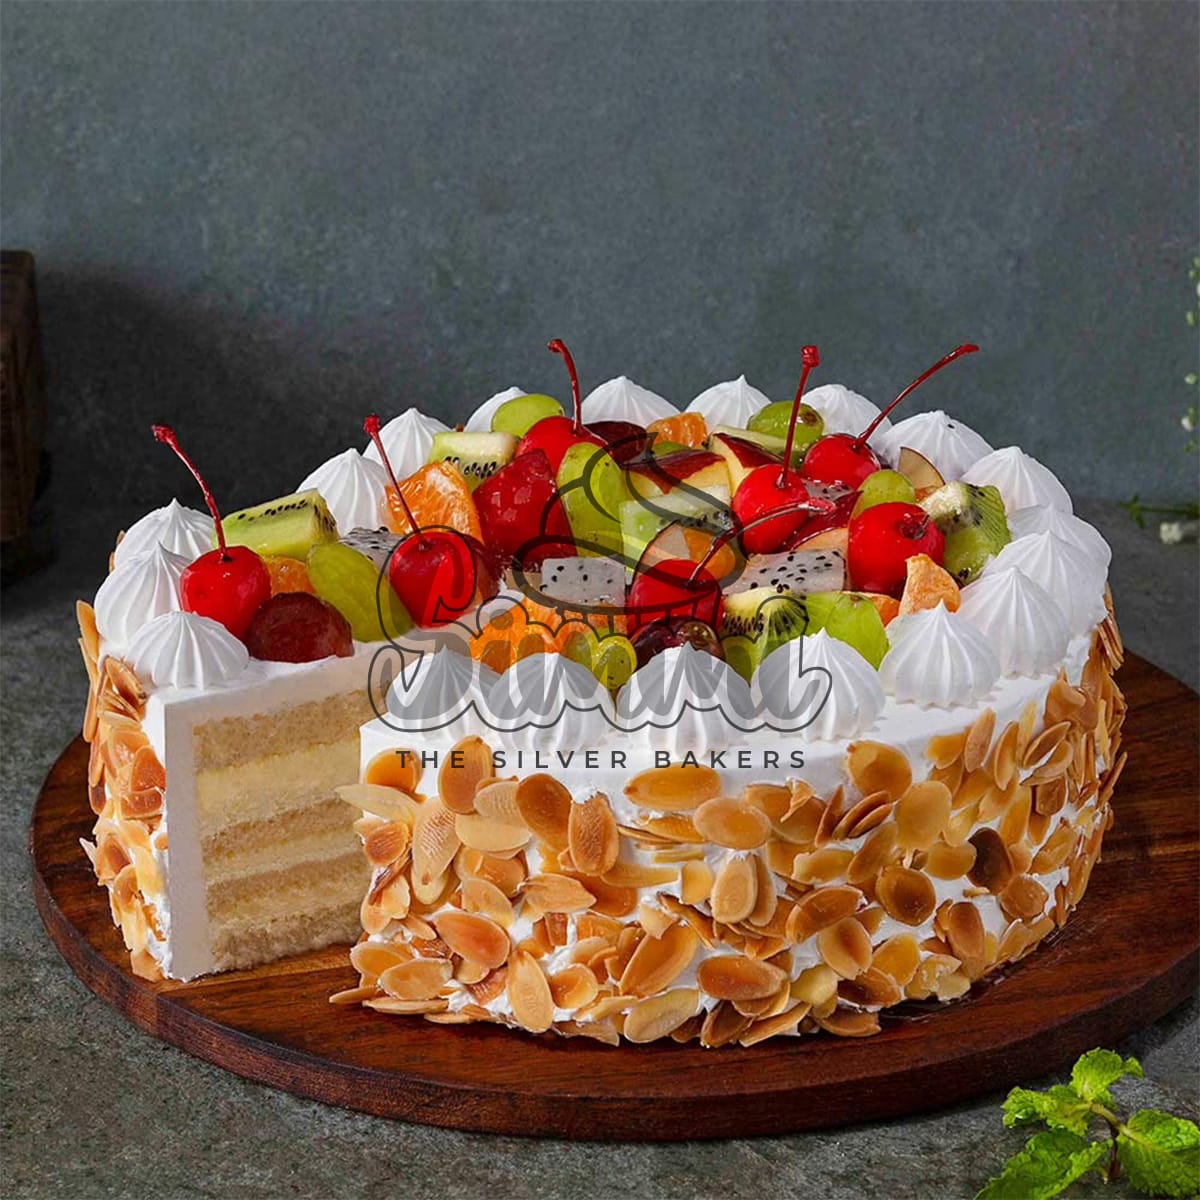 Simi's Cakes Pastries n Desserts | Facebook